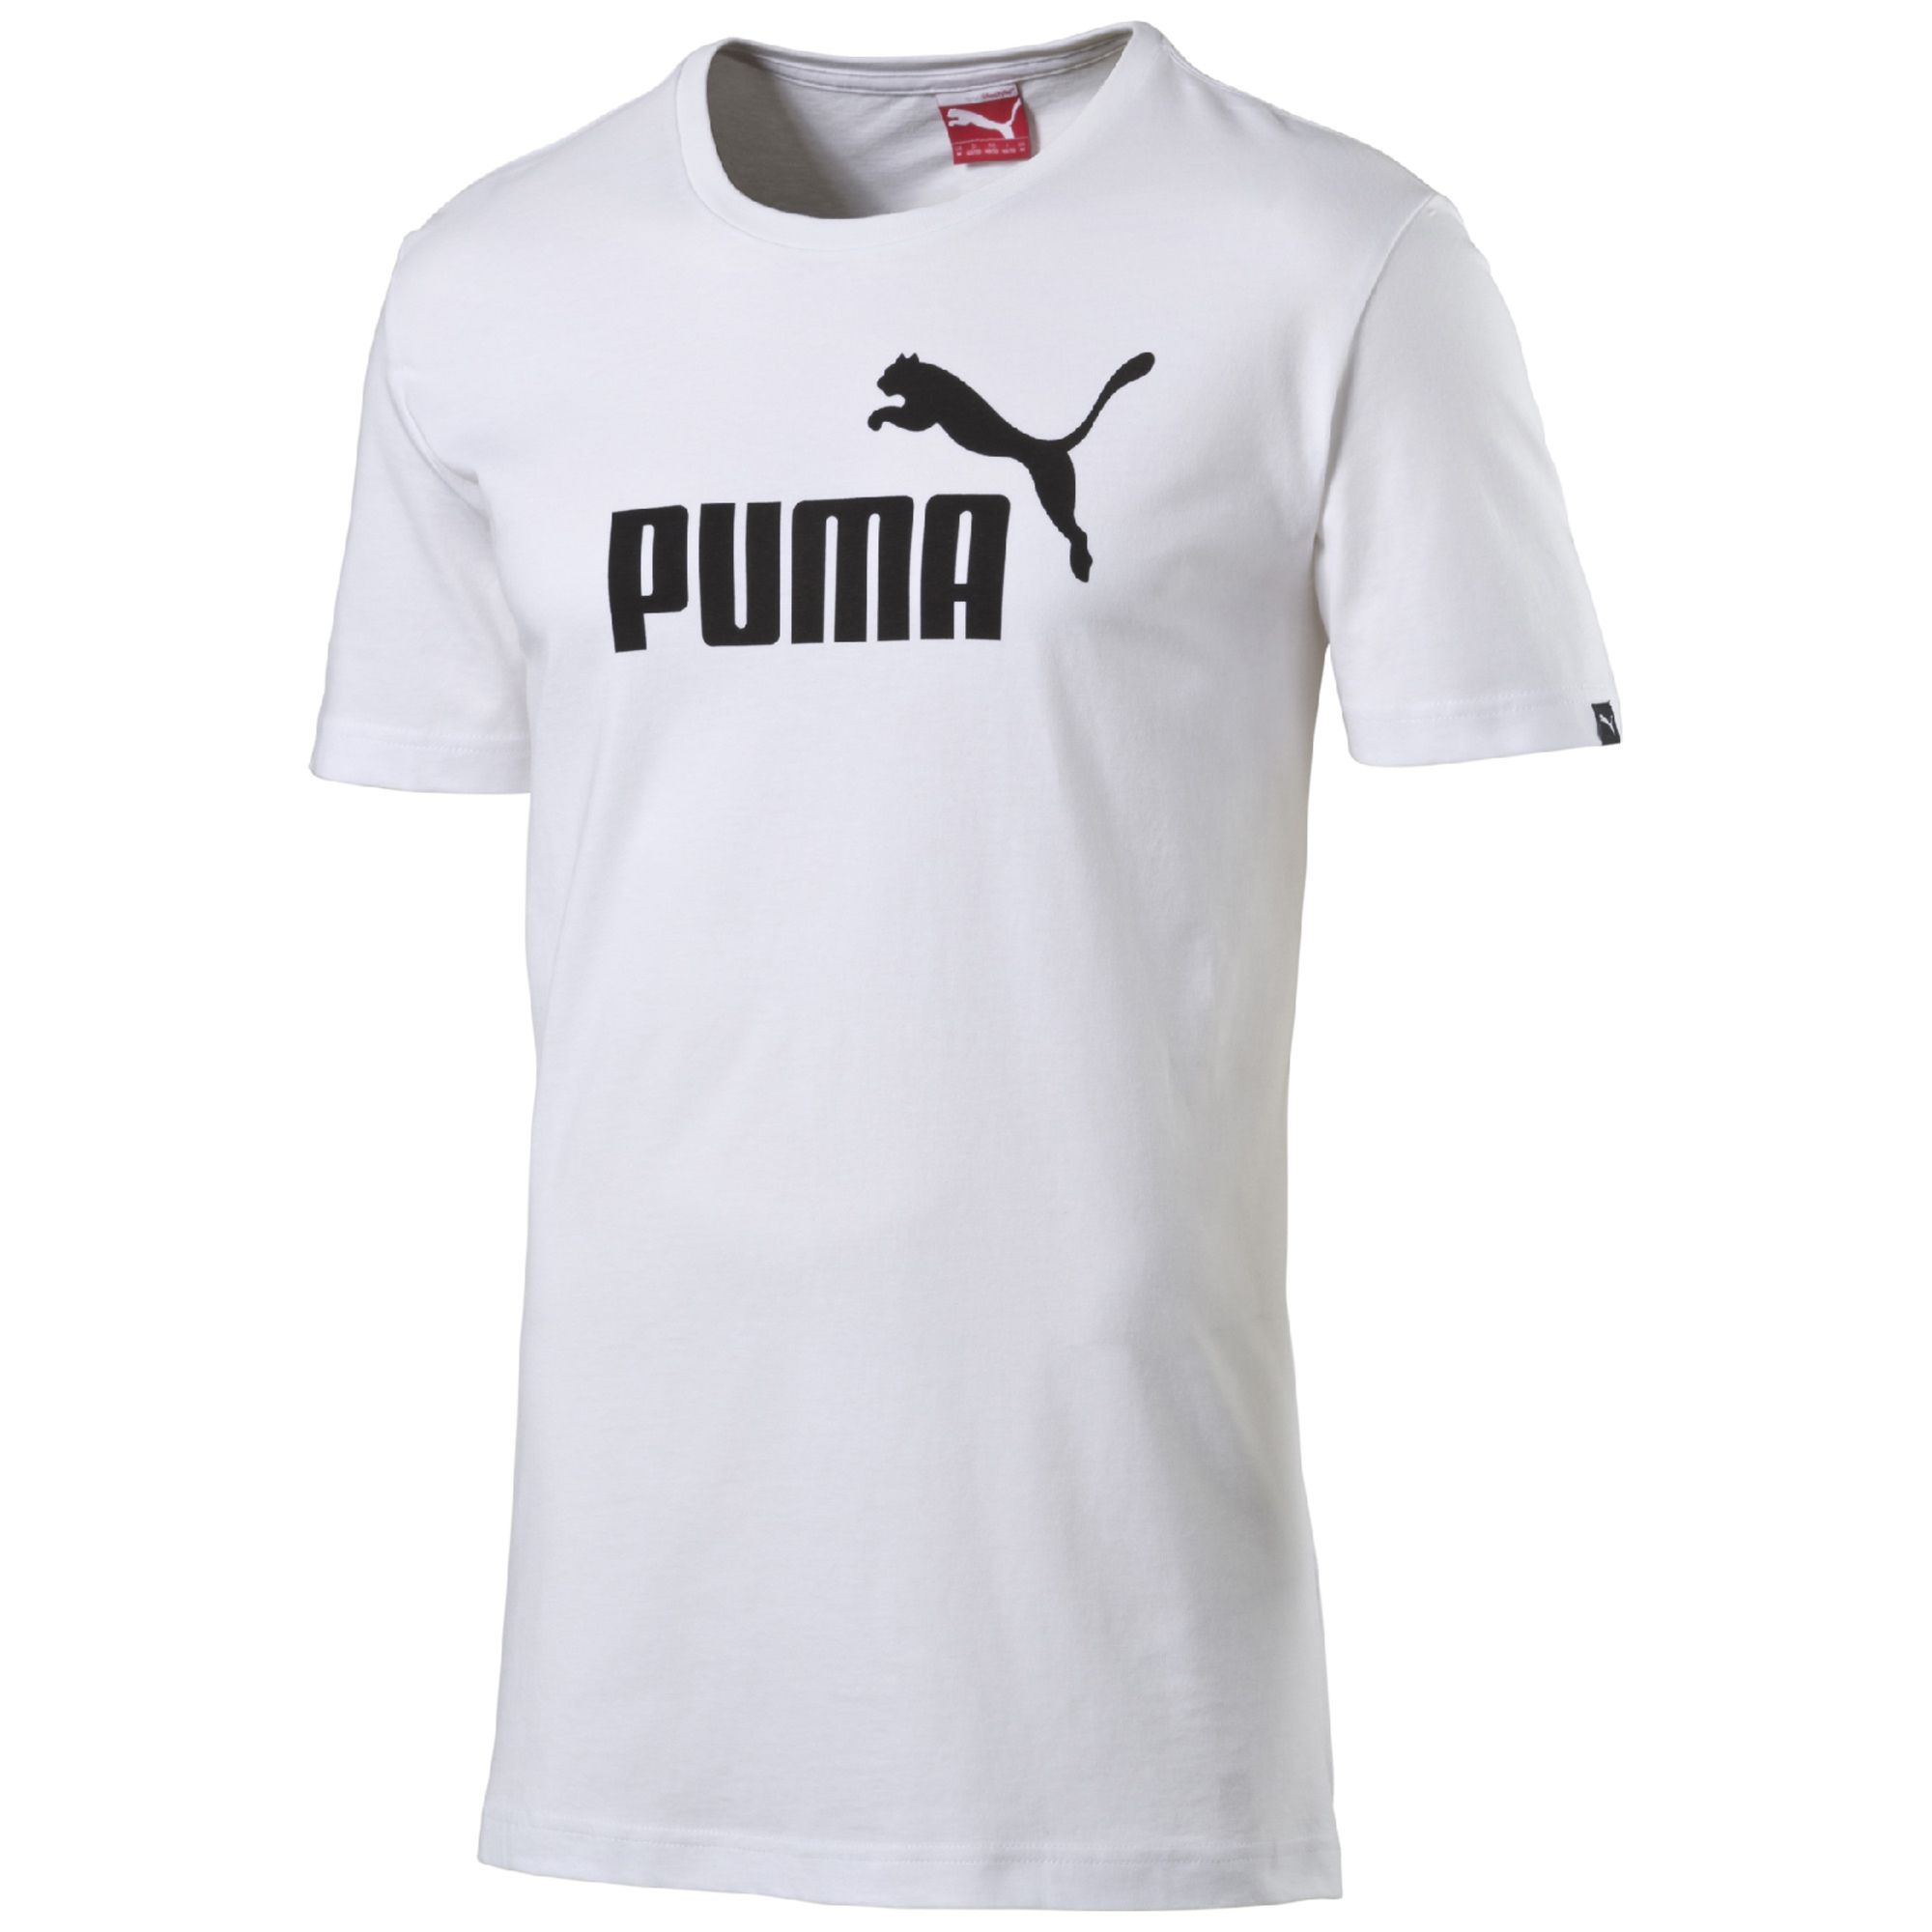  ESS No.1 Logo Tee - Puma  <br> ESS No.1 Logo Tee   ESS No.1 Logo Tee,  ,      .      .        .   PUMA,      , ,        .: - 2015 : 100%  ,                    <br><br>color: <br>size US: XXL<br>gender: Male